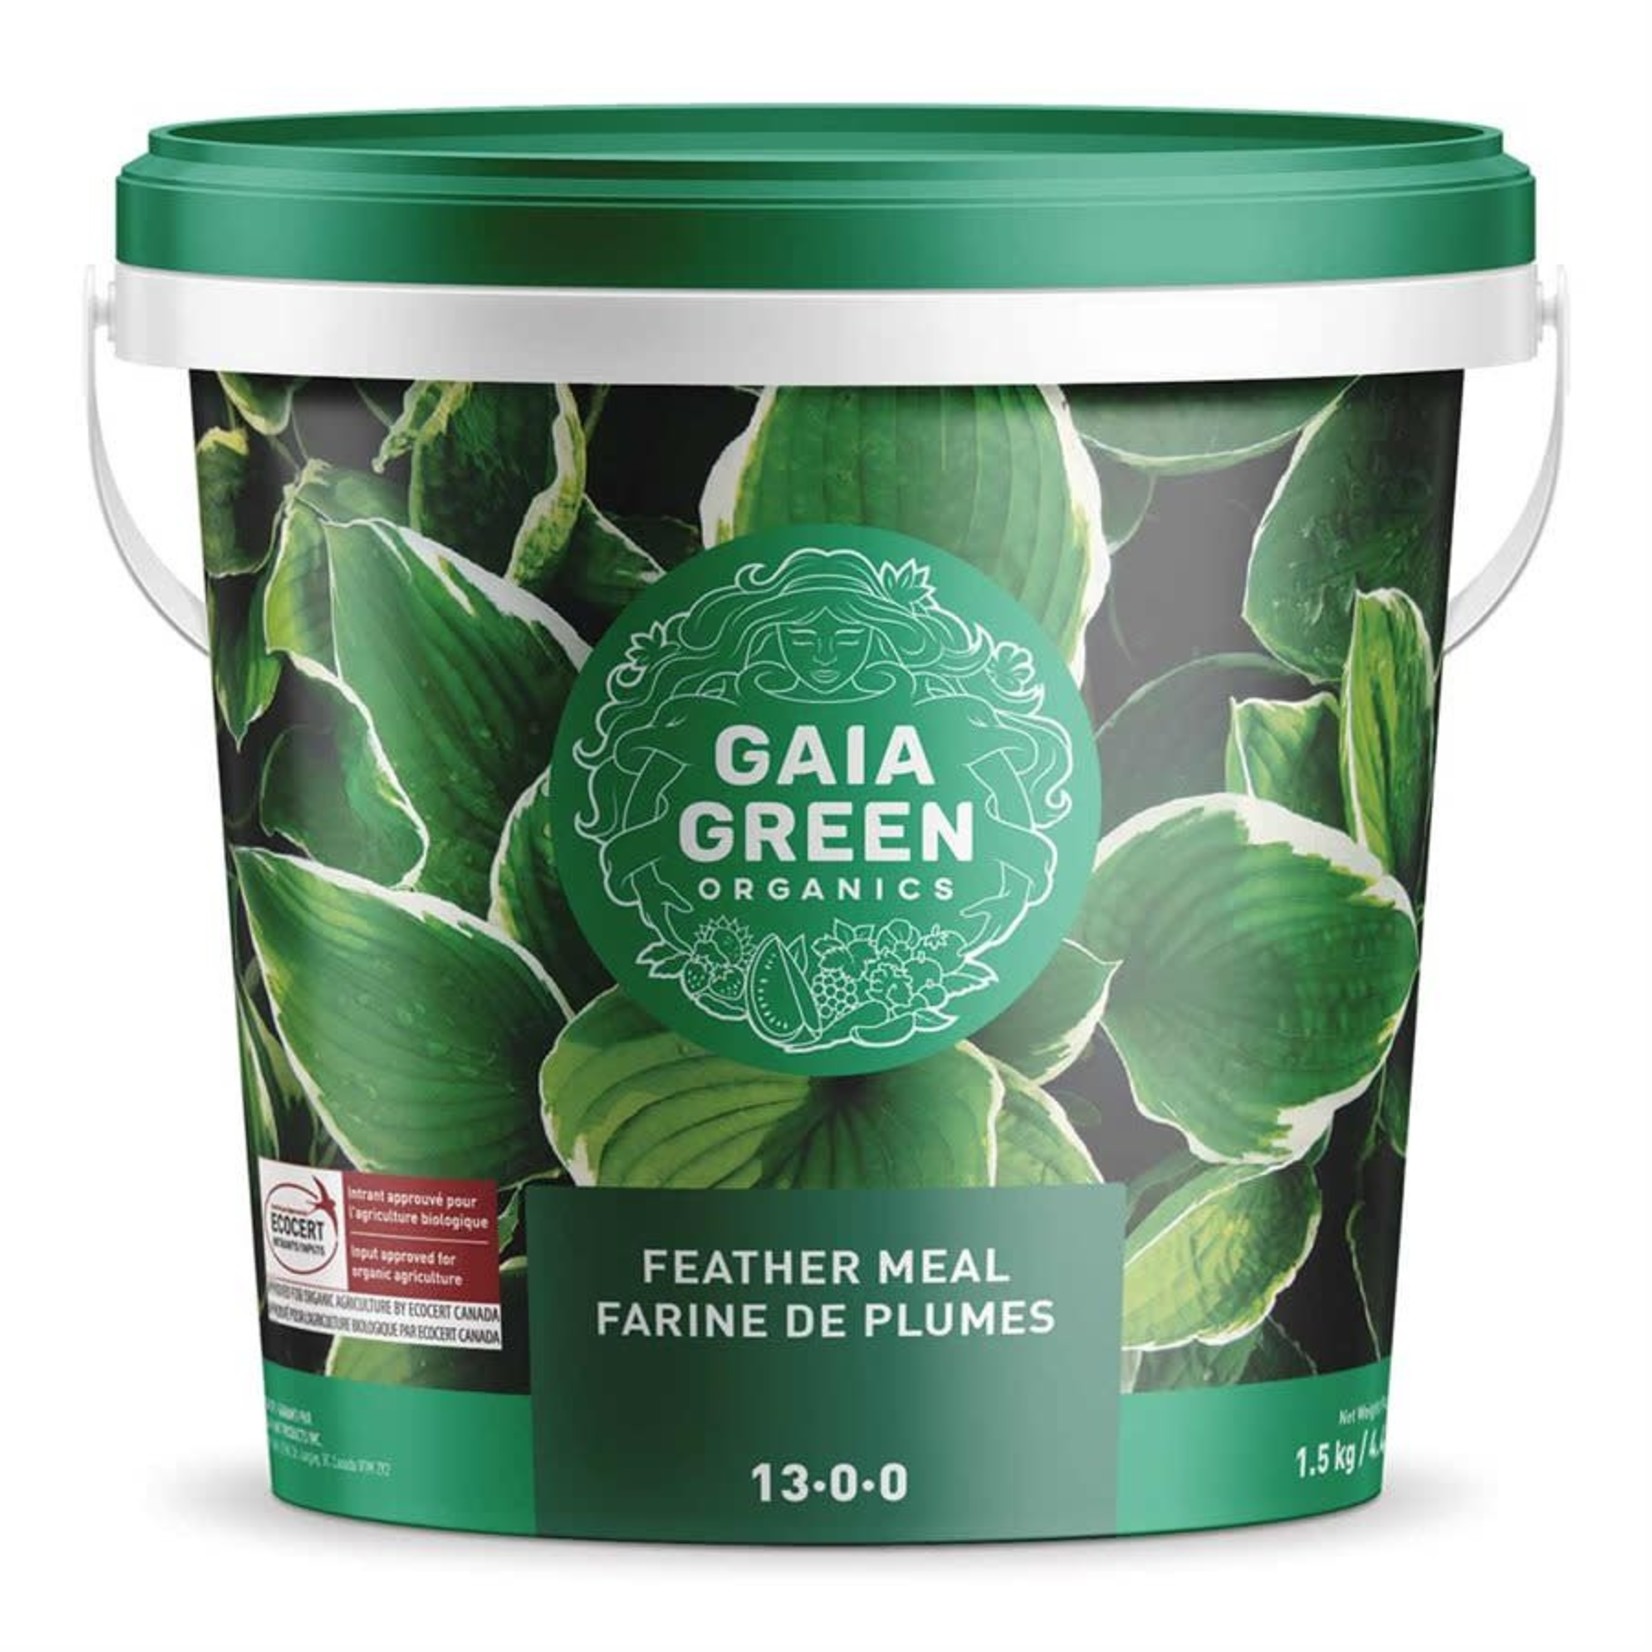 gaia green GAIA GREEN FEATHER MEAL 1.5 KG 13-0-0